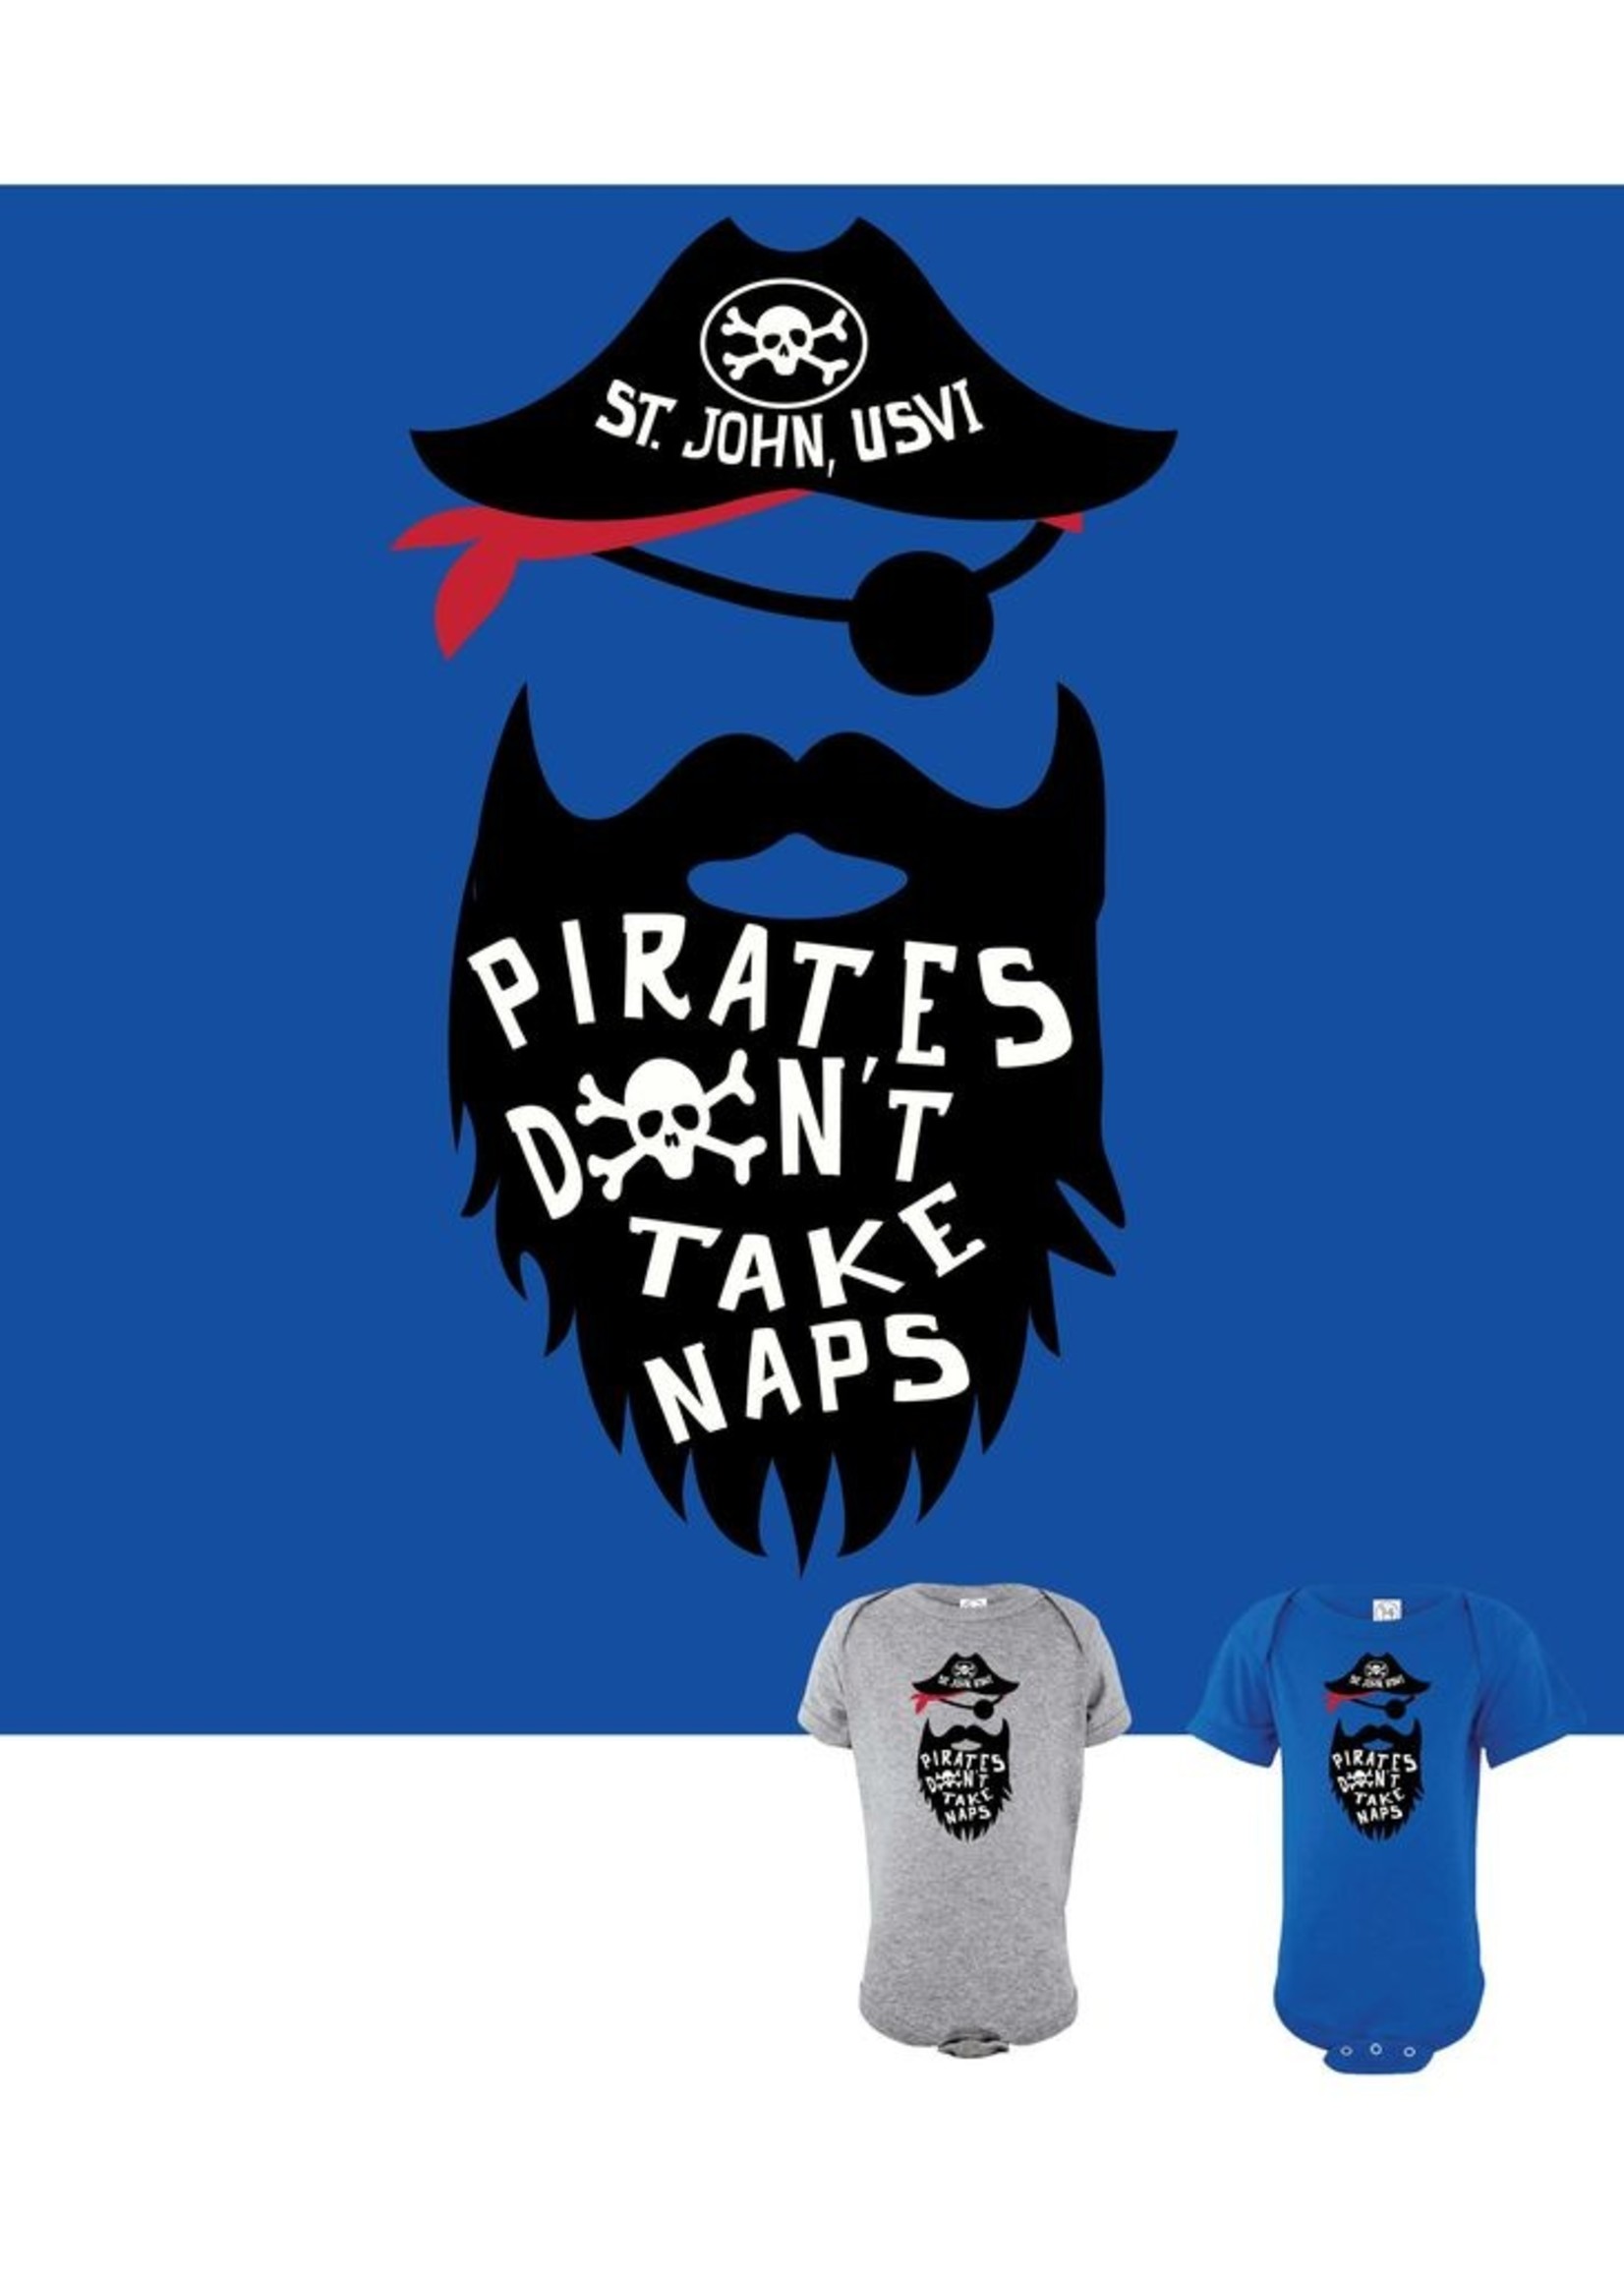 St. John Beach Bum Forty Winks Pirate Onesie